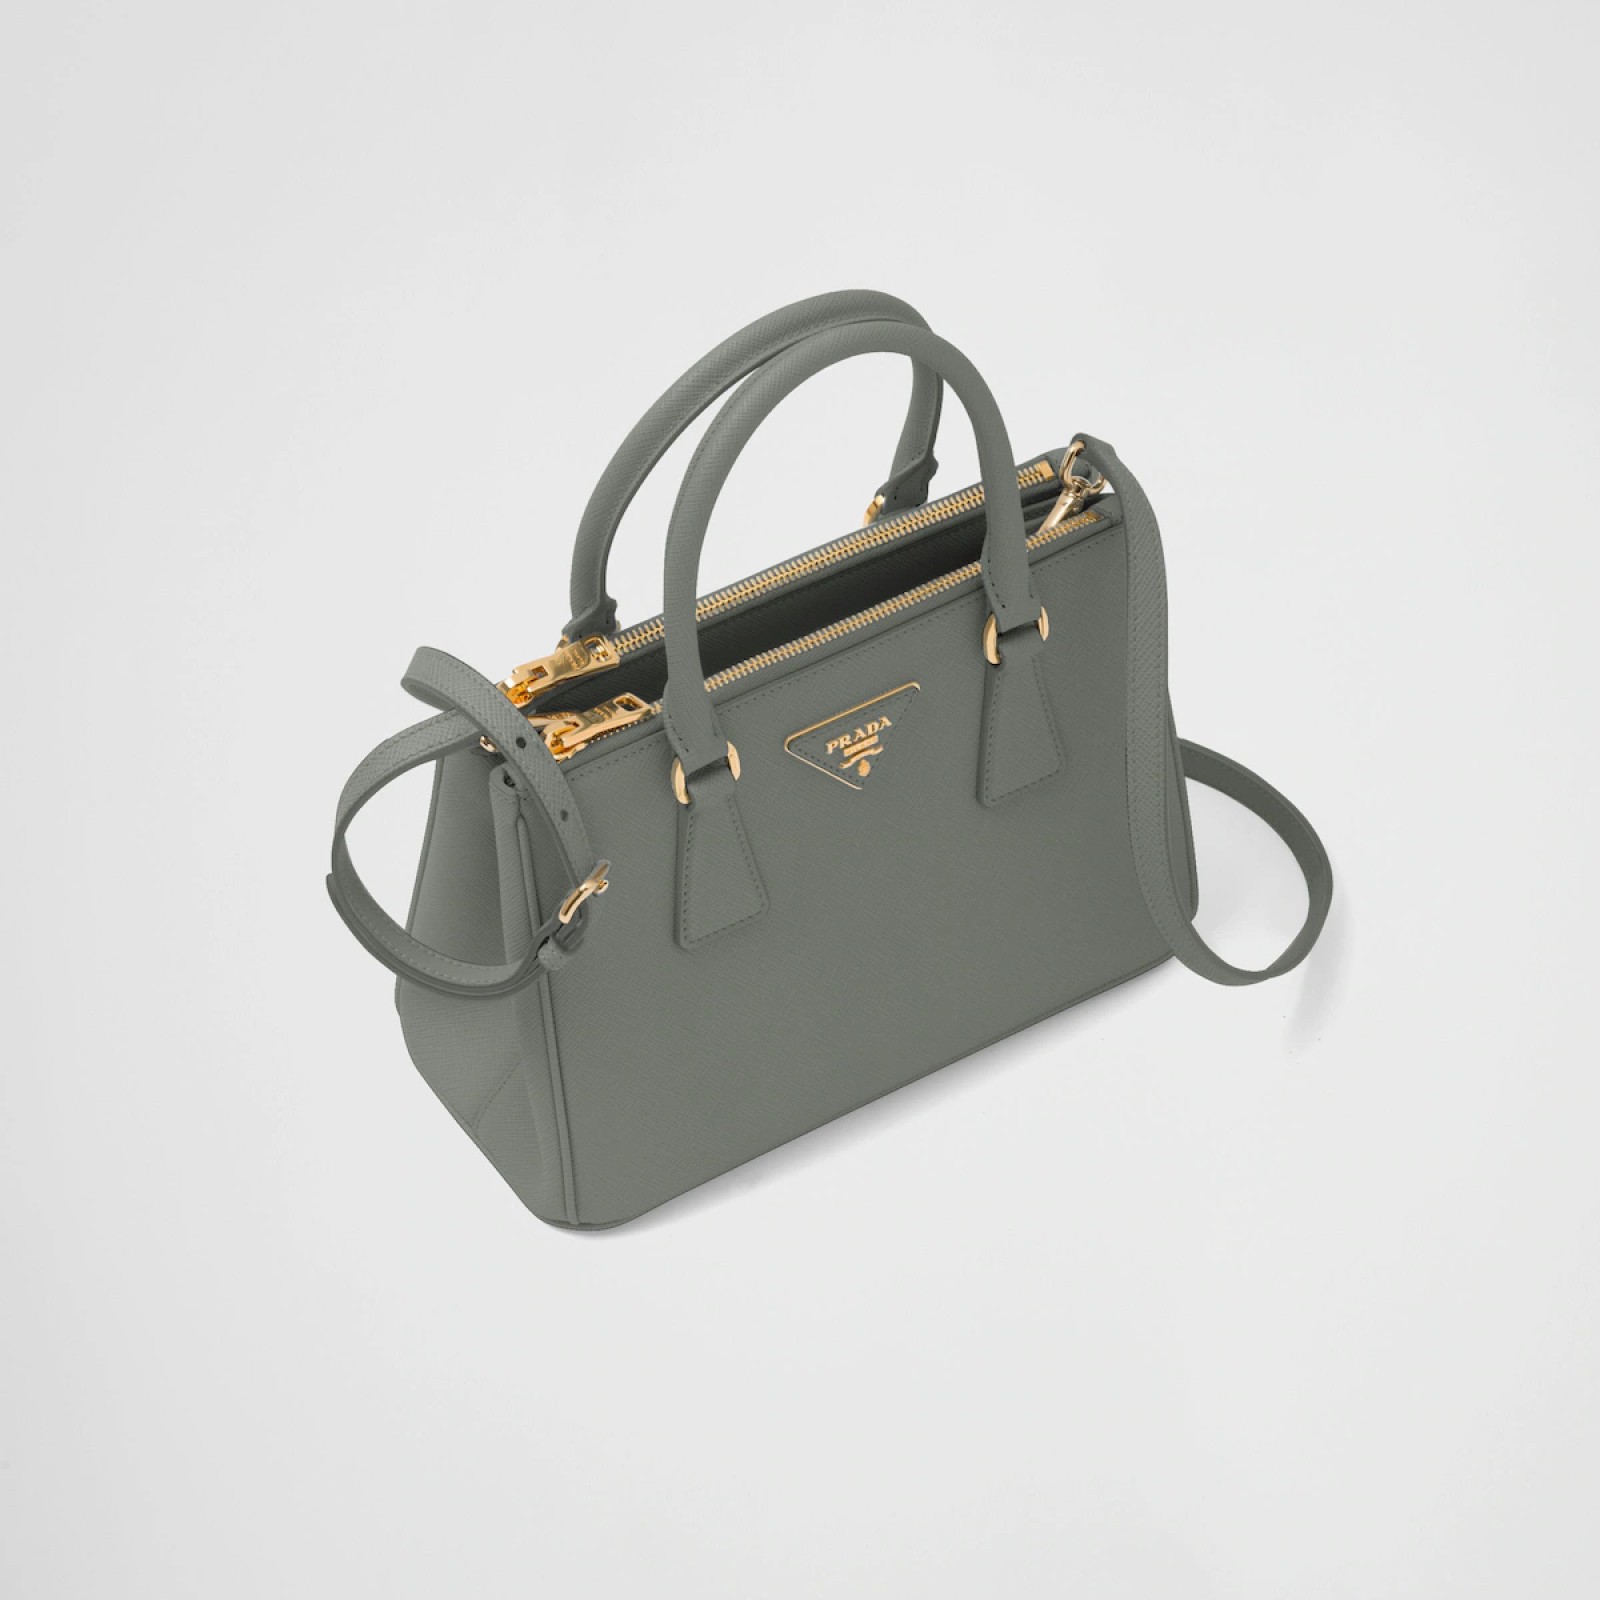 Small Prada Galleria Saffiano leather bag